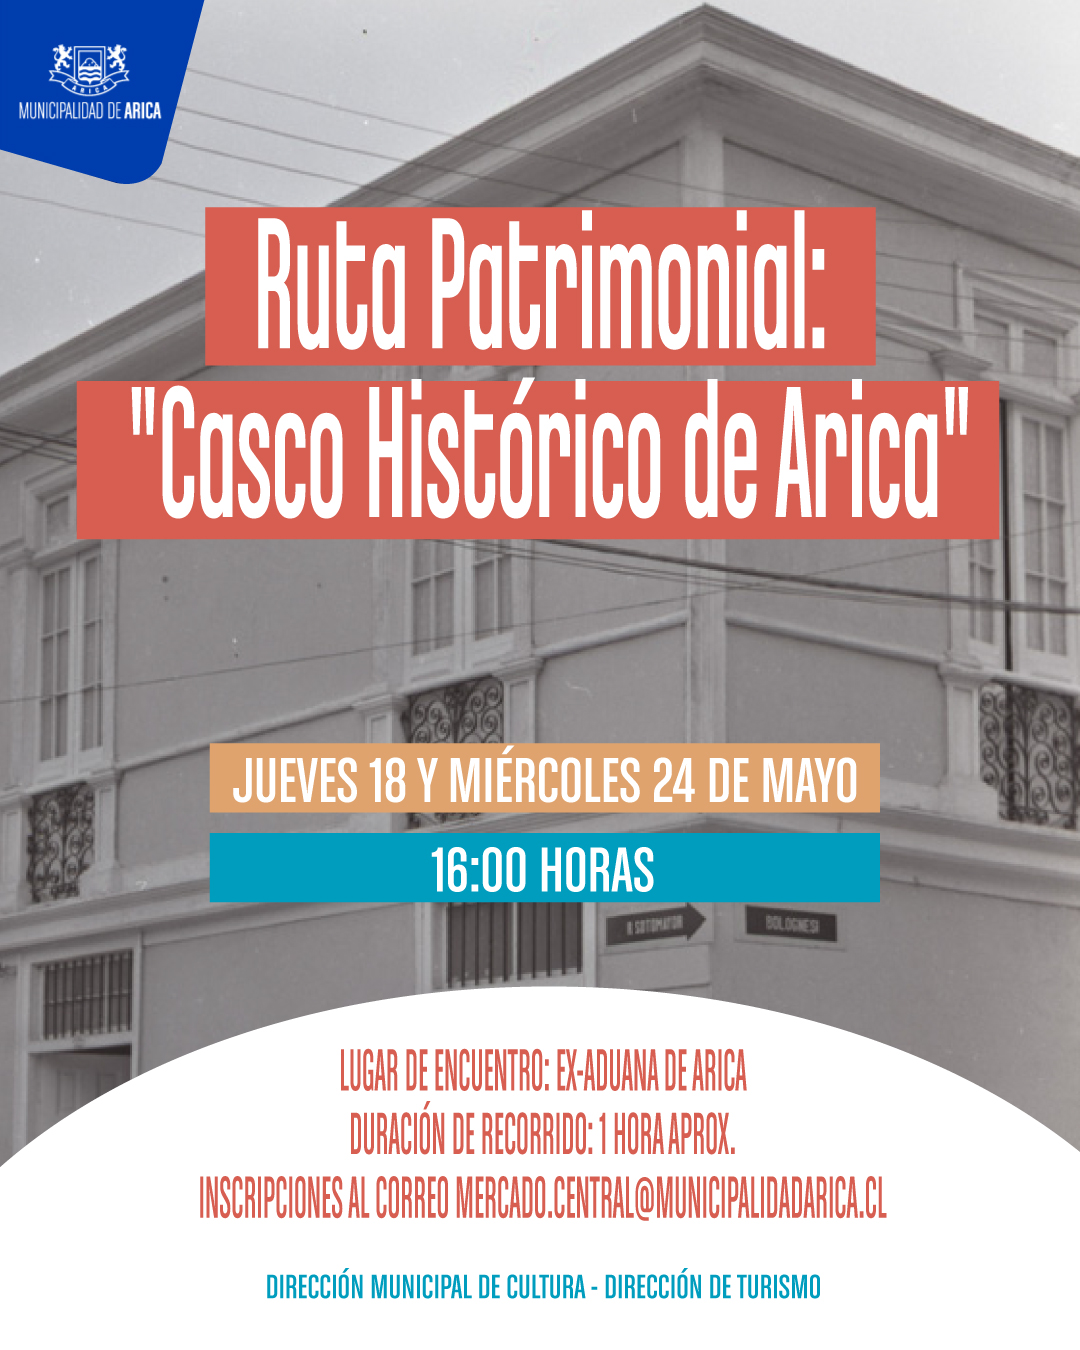 Ruta Patrimonial Casco Historico de Arica